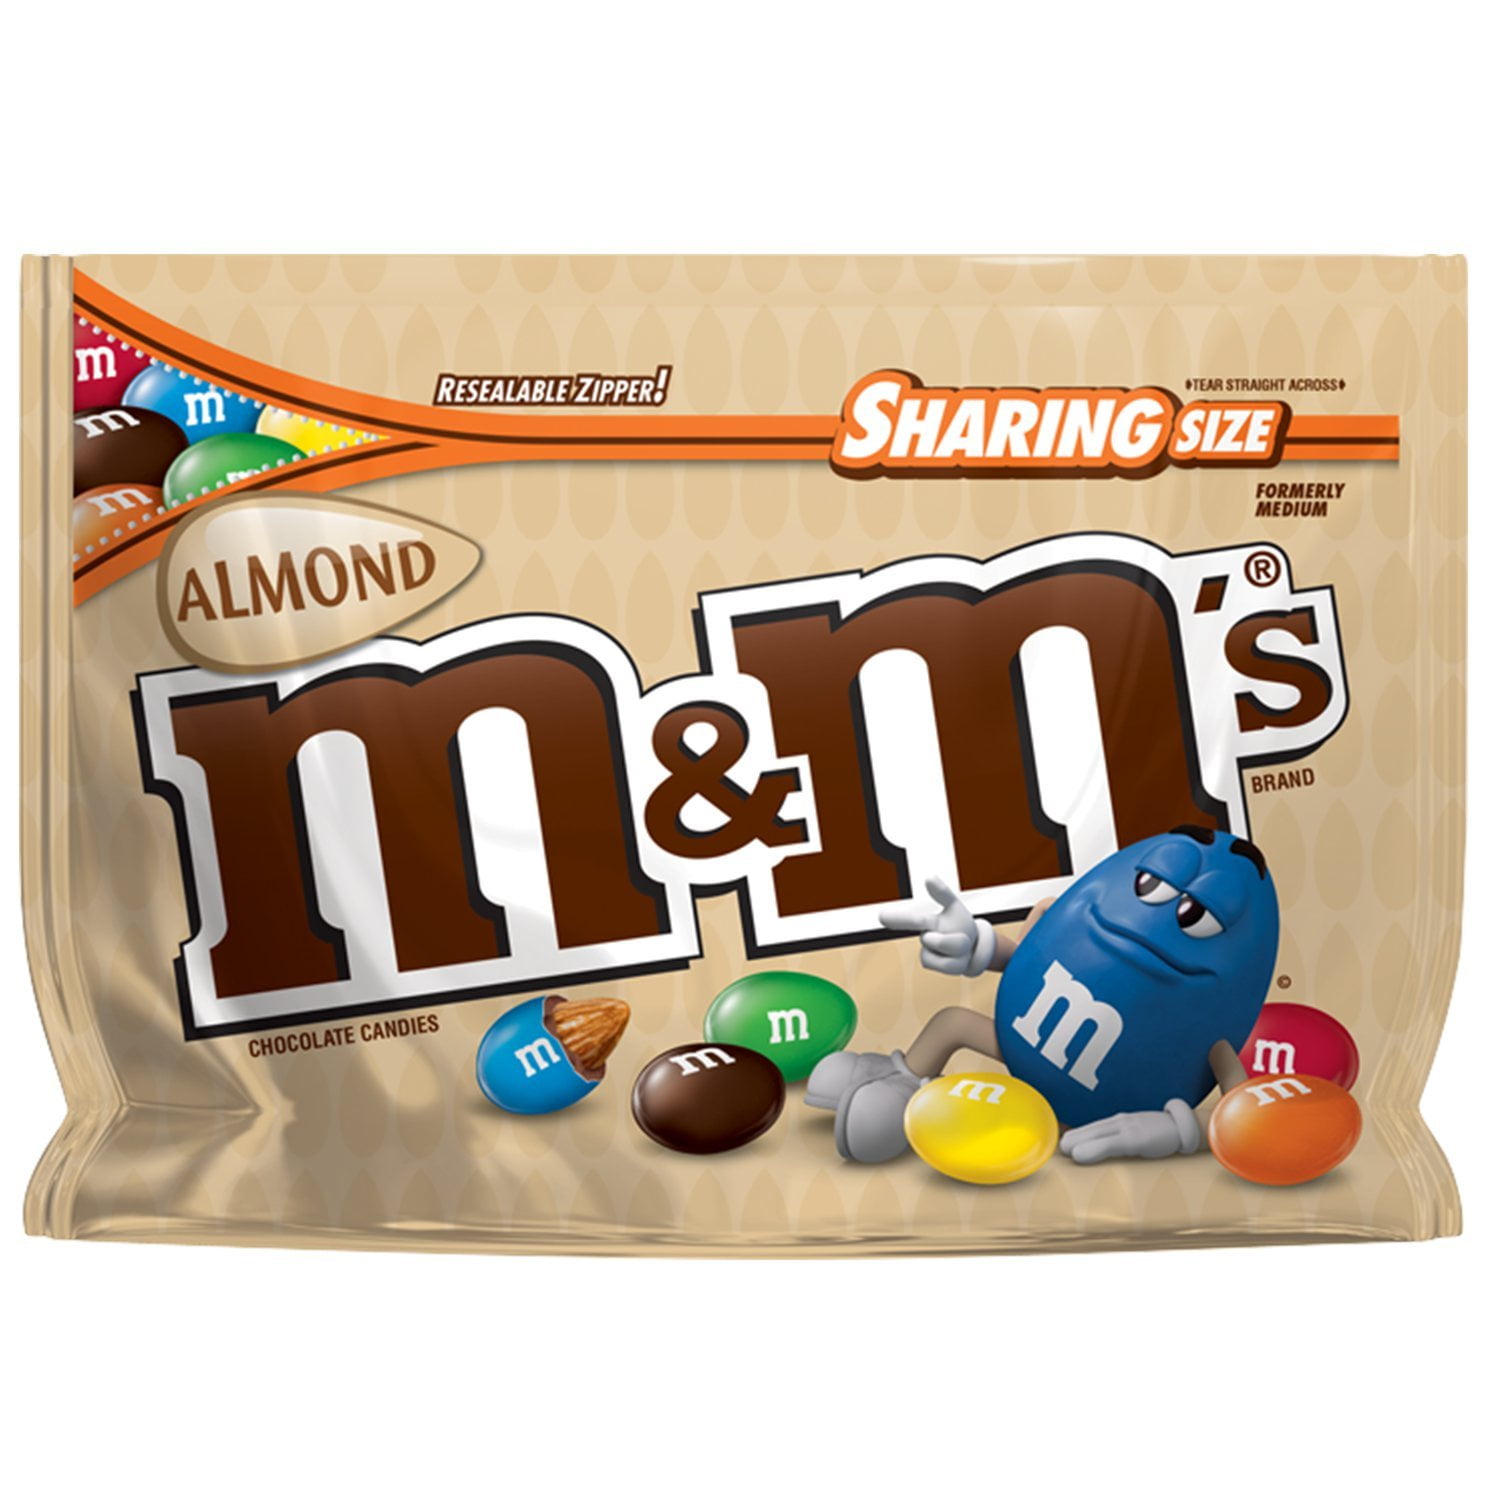 M&M'S Almond Milk Chocolate Candy Sharing Size Bag, 9.3 oz - Kroger